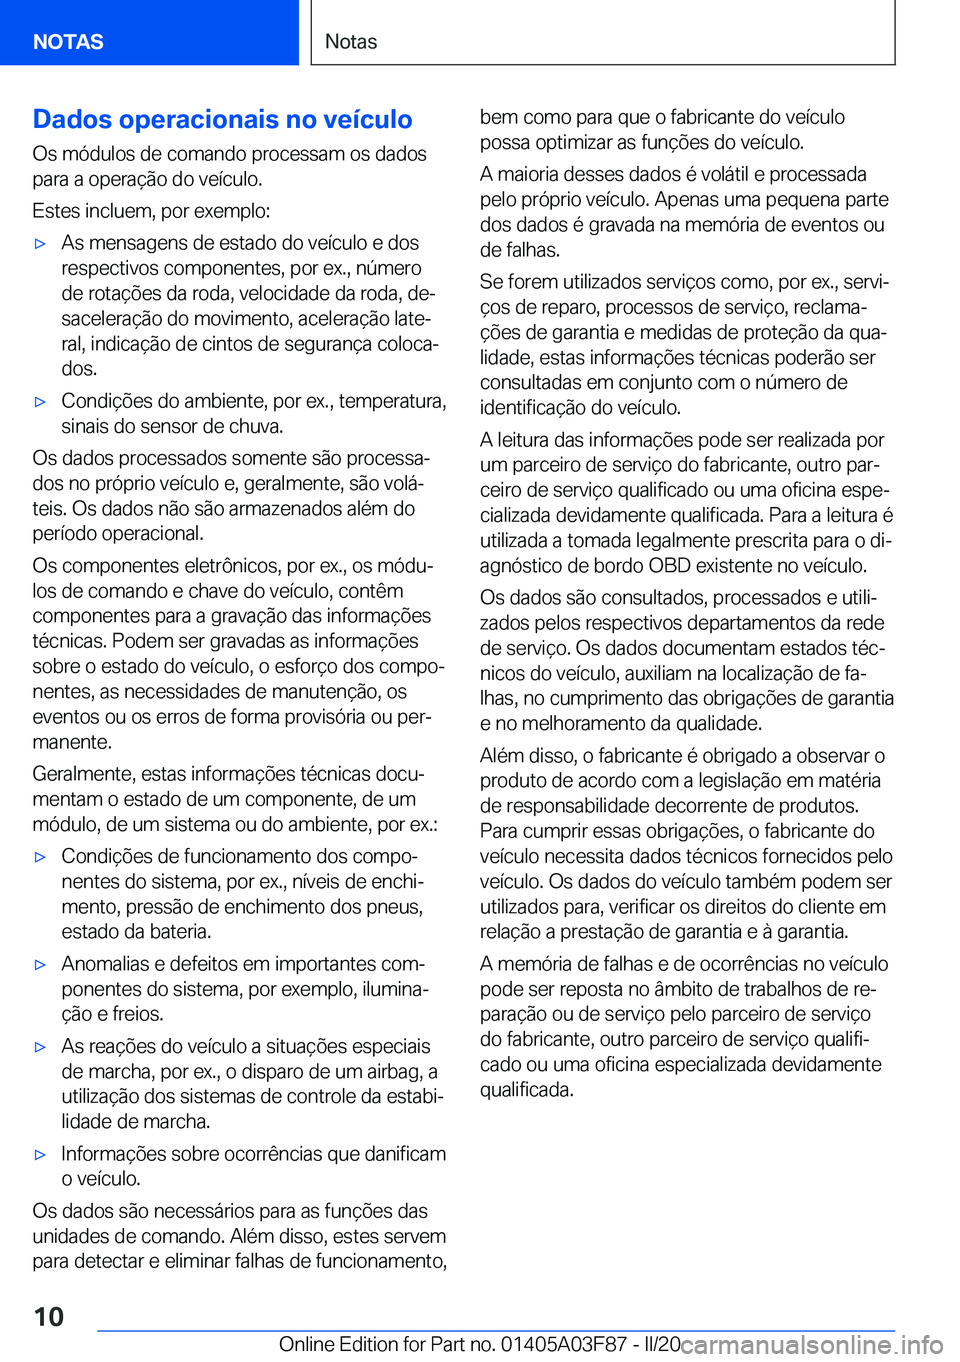 BMW 3 SERIES 2020  Manual do condutor (in Portuguese) �D�a�d�o�s��o�p�e�r�a�c�i�o�n�a�i�s��n�o��v�e�